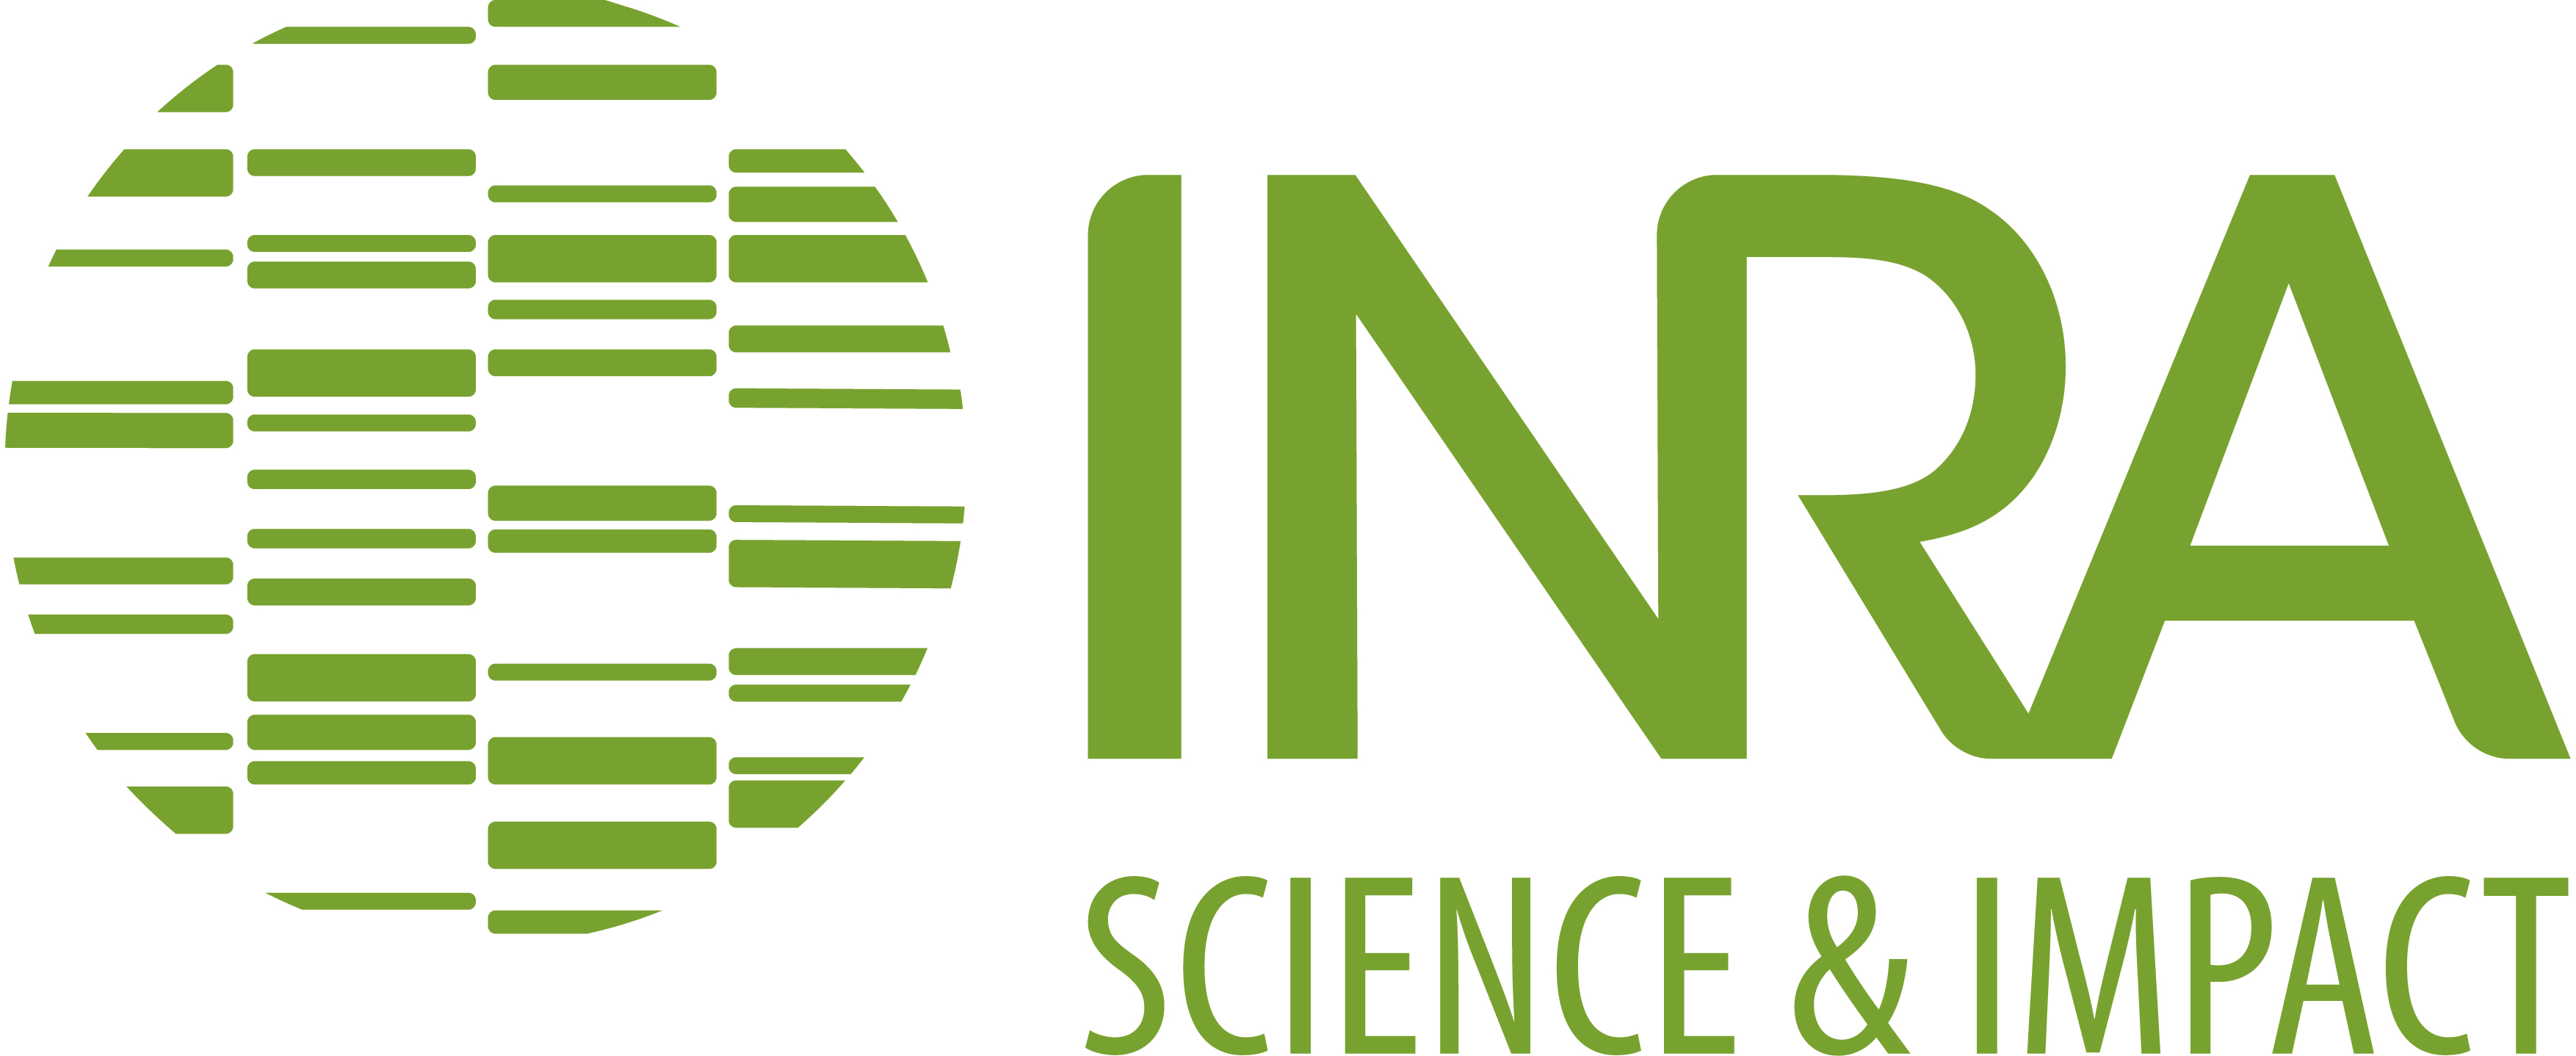 INRA_logo.jpg